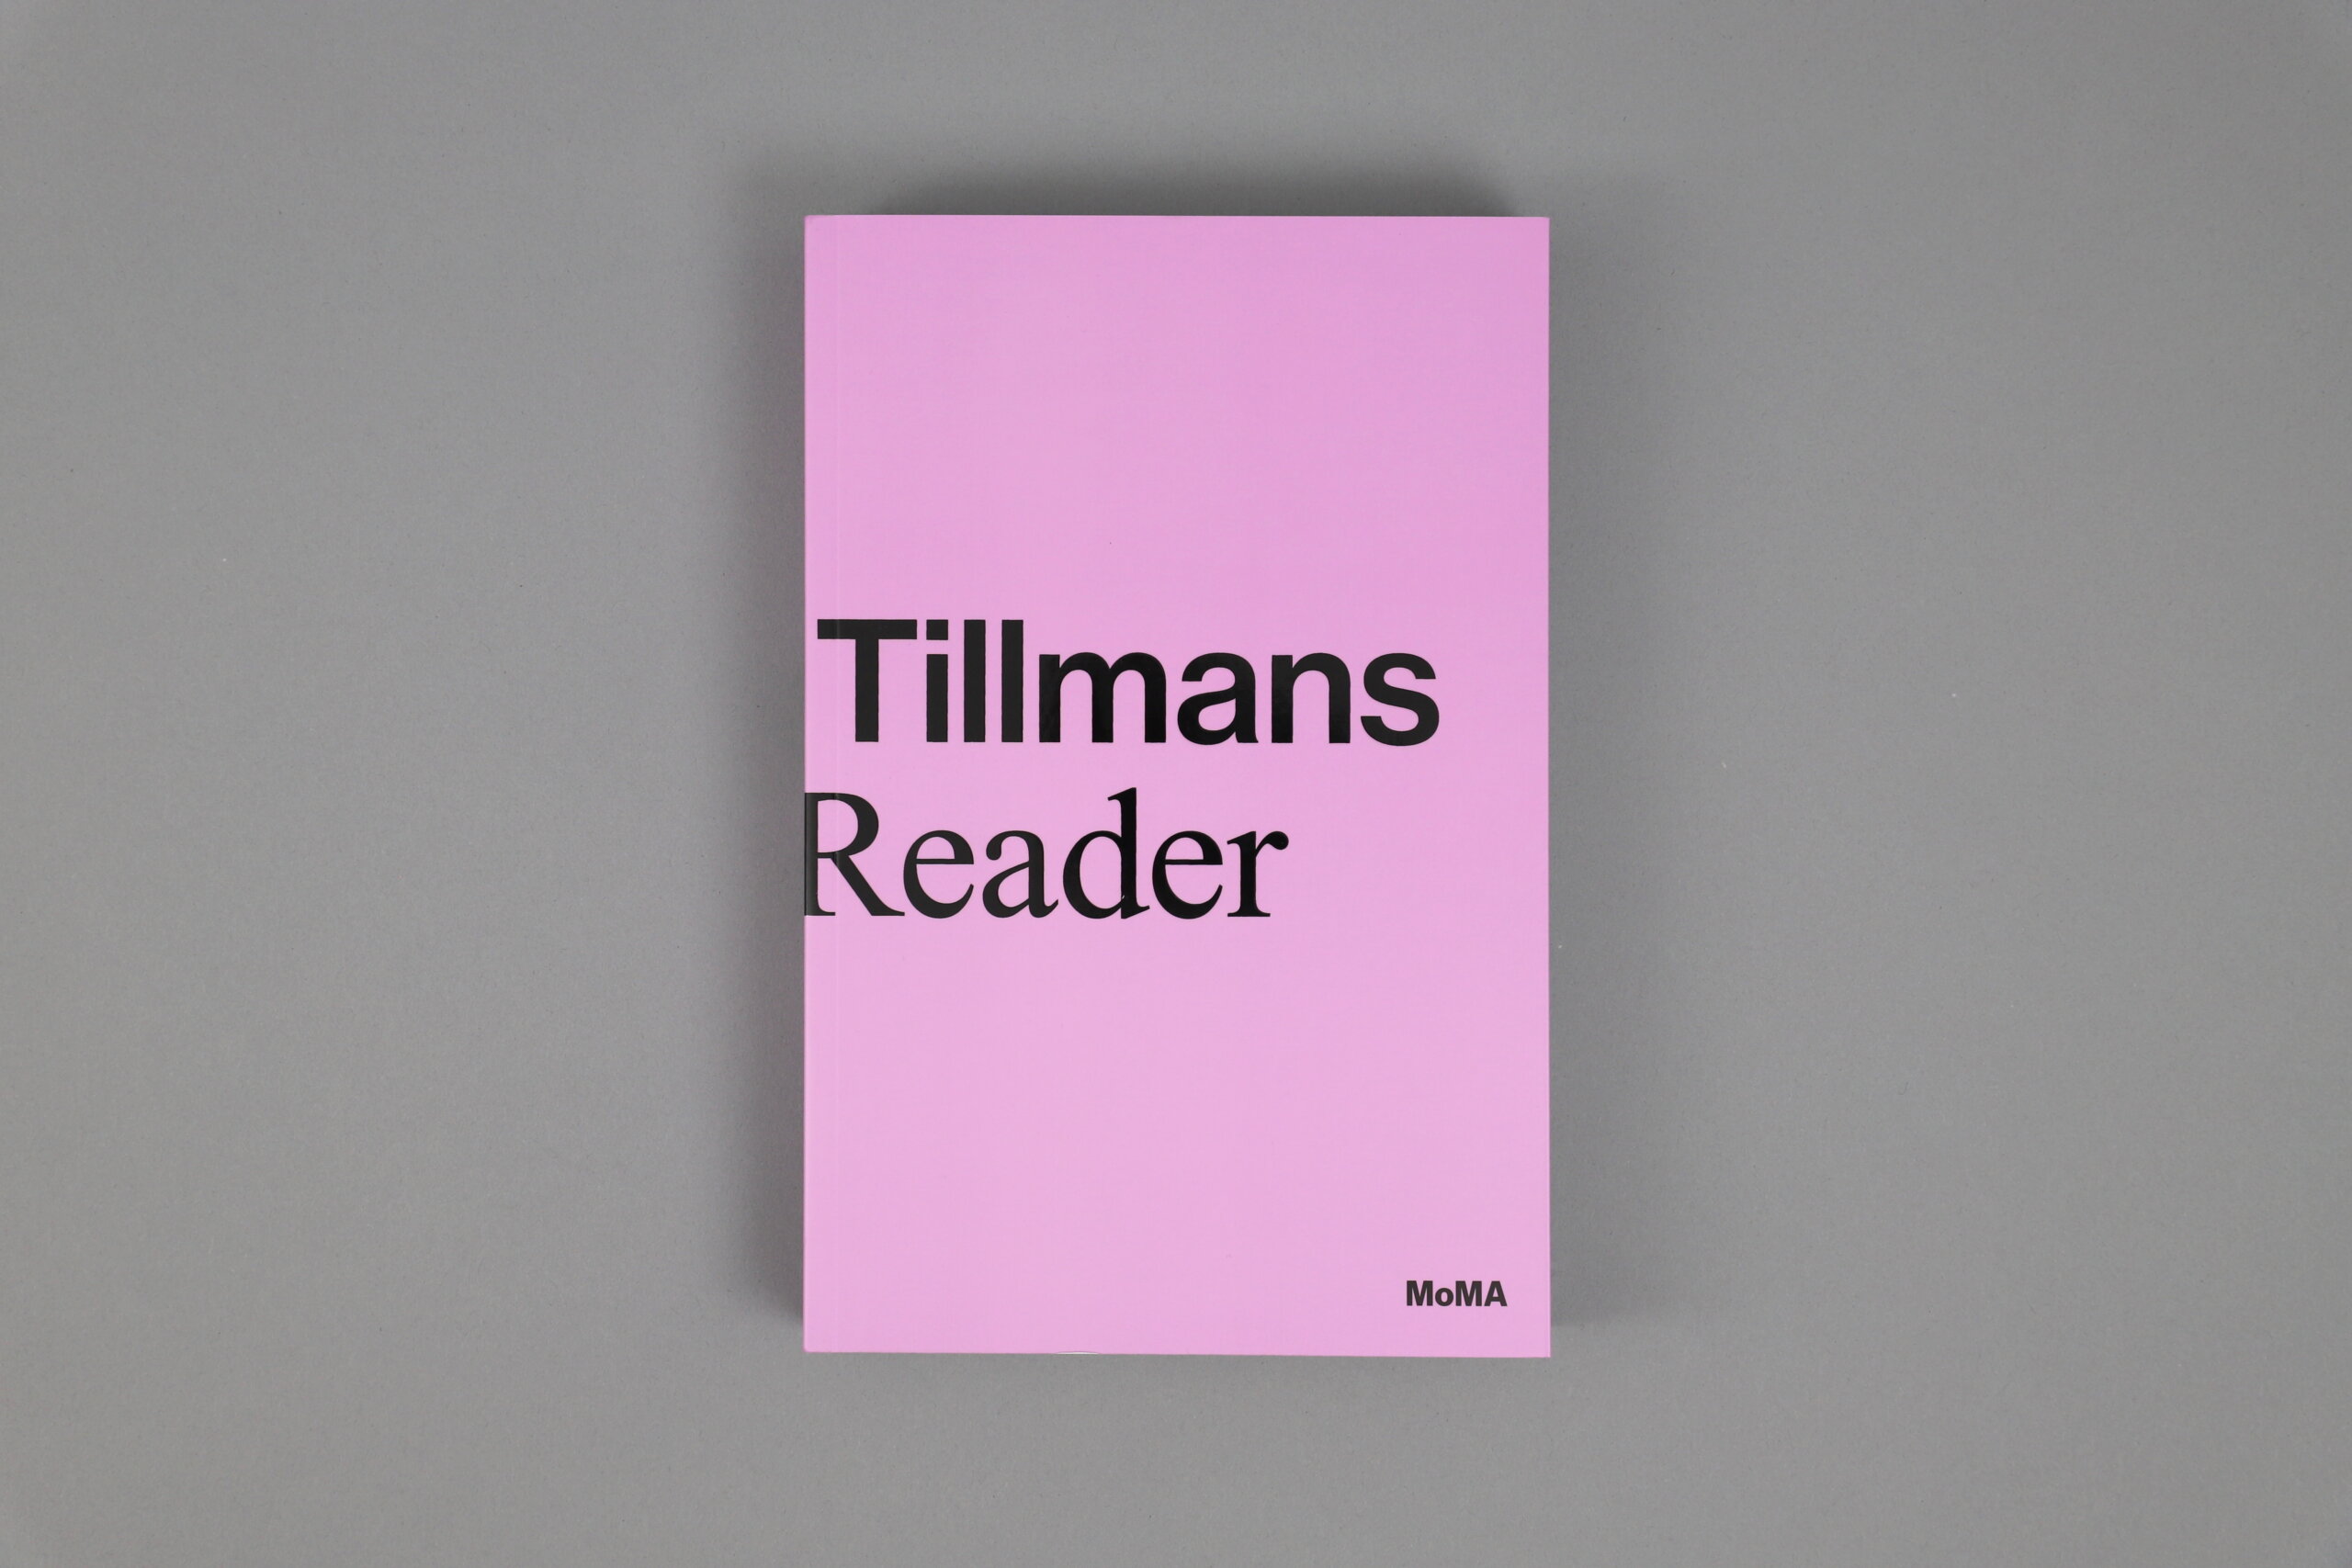 A-reader-Wolfgang-Tillmans-MoMa-1